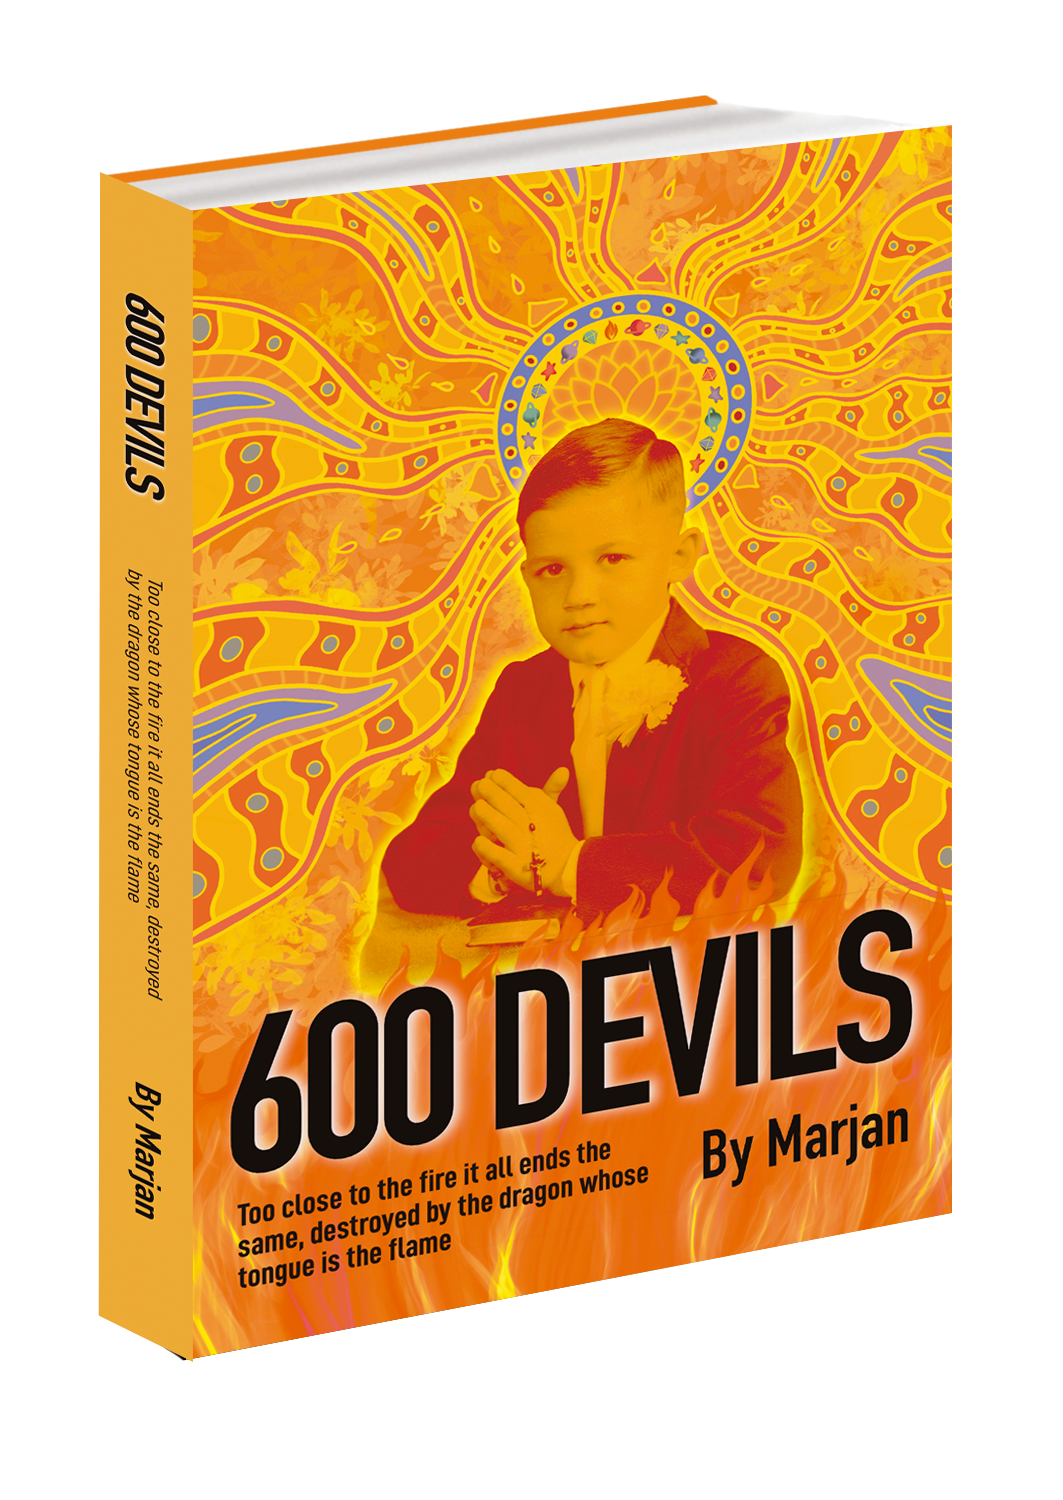 600 Devils